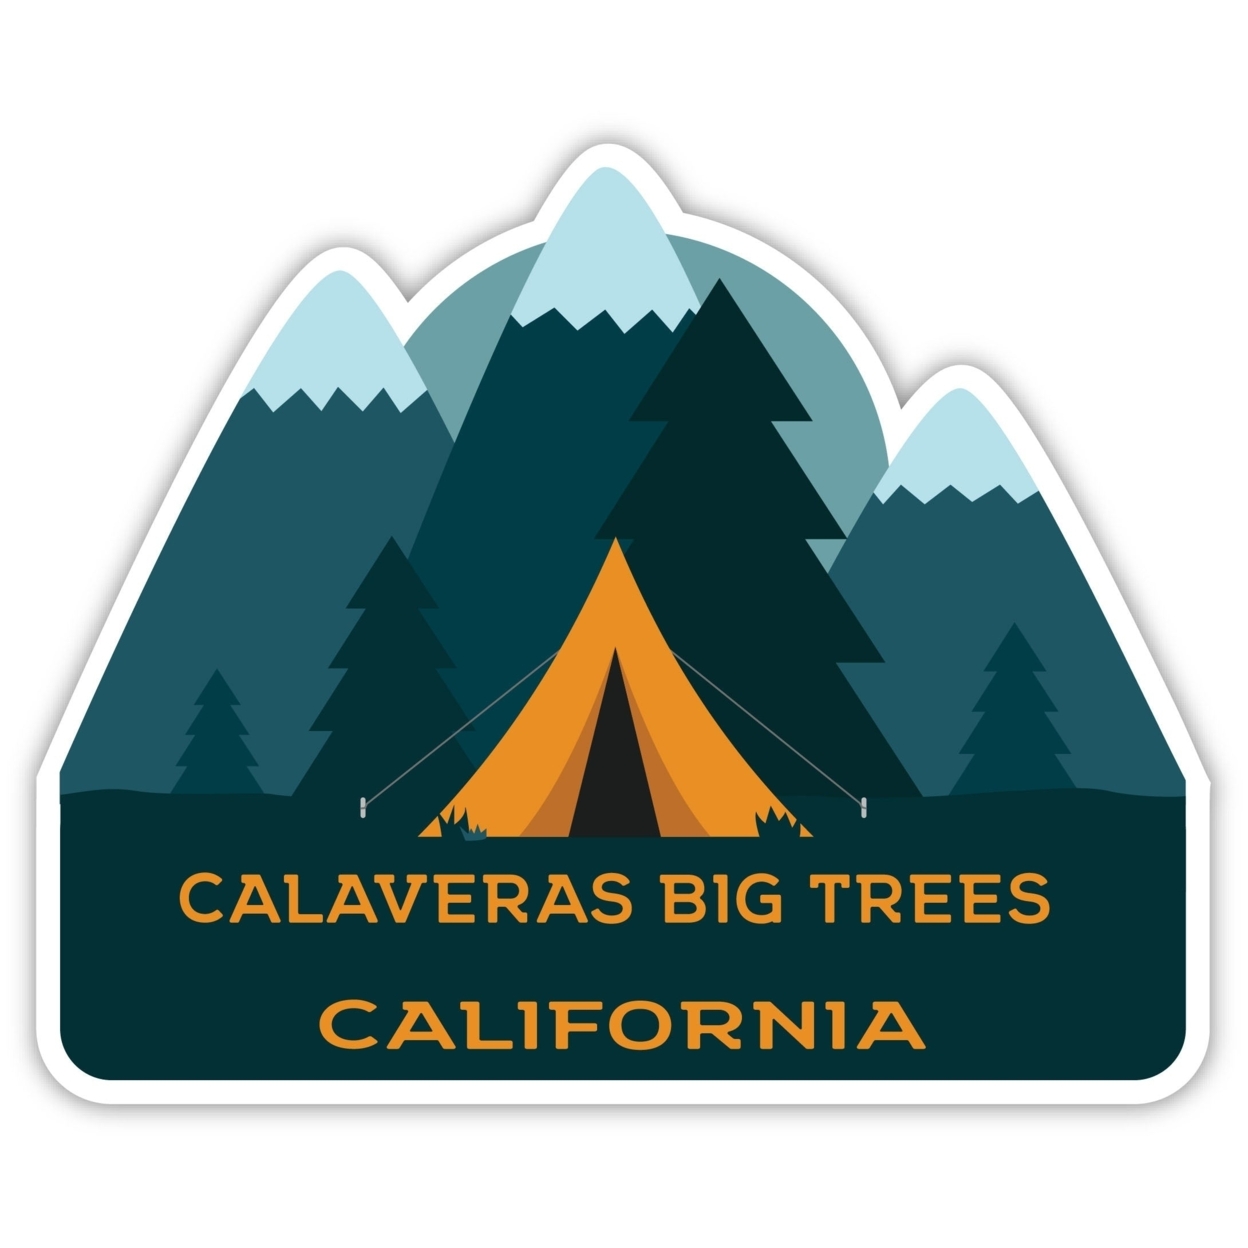 Calaveras Big Trees California Souvenir Decorative Stickers (Choose Theme And Size) - 4-Pack, 2-Inch, Camp Life